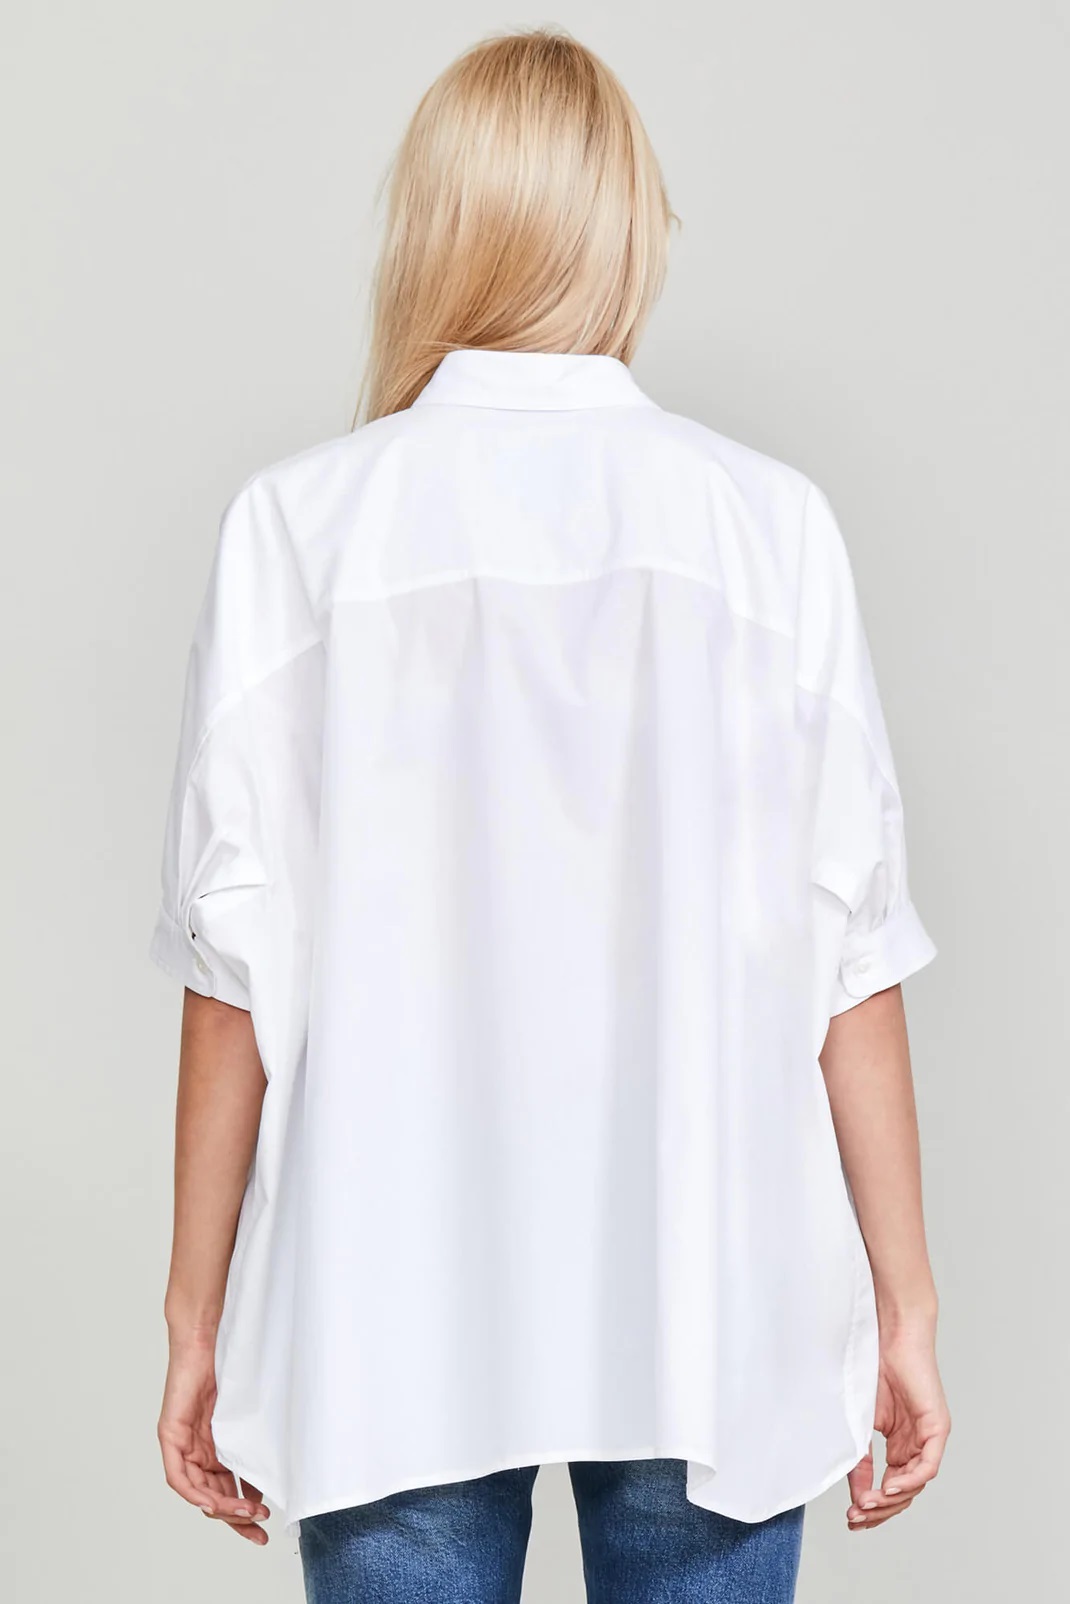 R13 Oversized Boxy Shirt in White XS